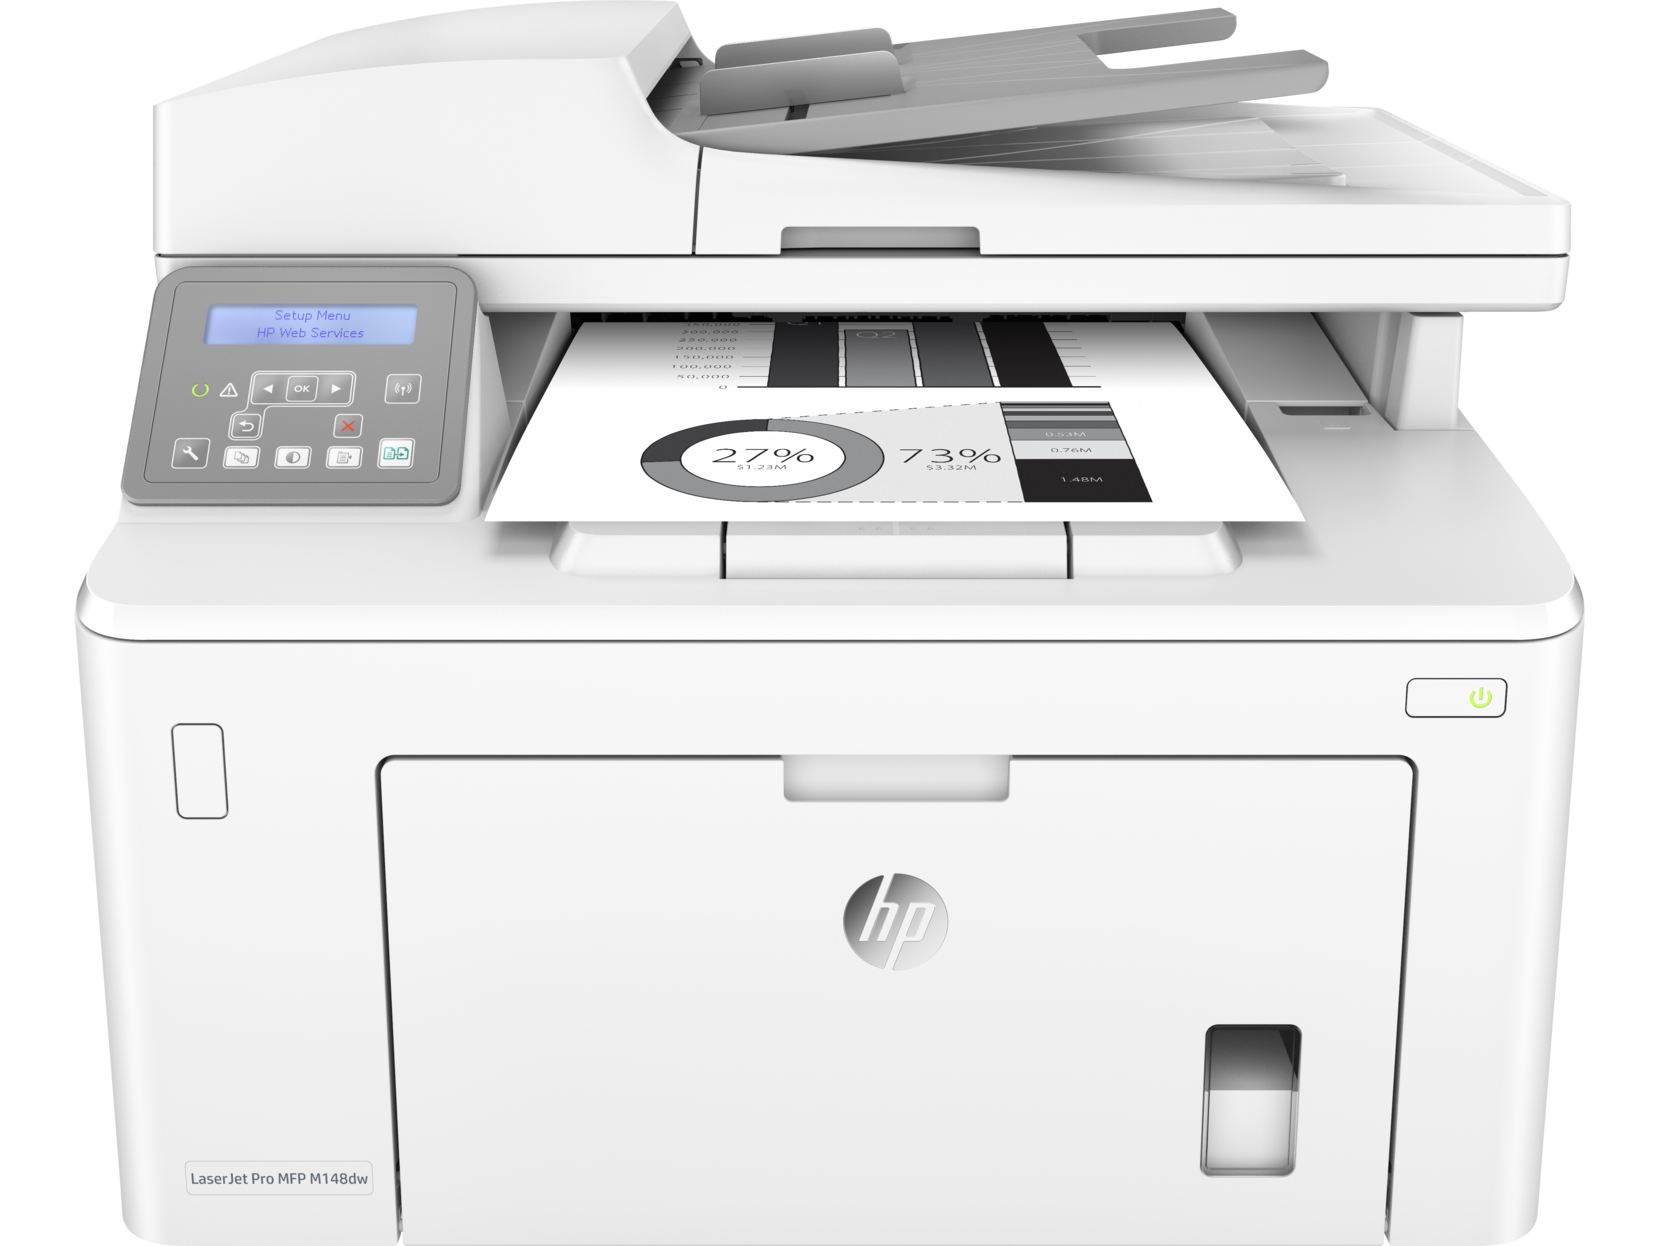 printer-laser-hp-mfp-m148dw-muilti-function-black-and-white-laser